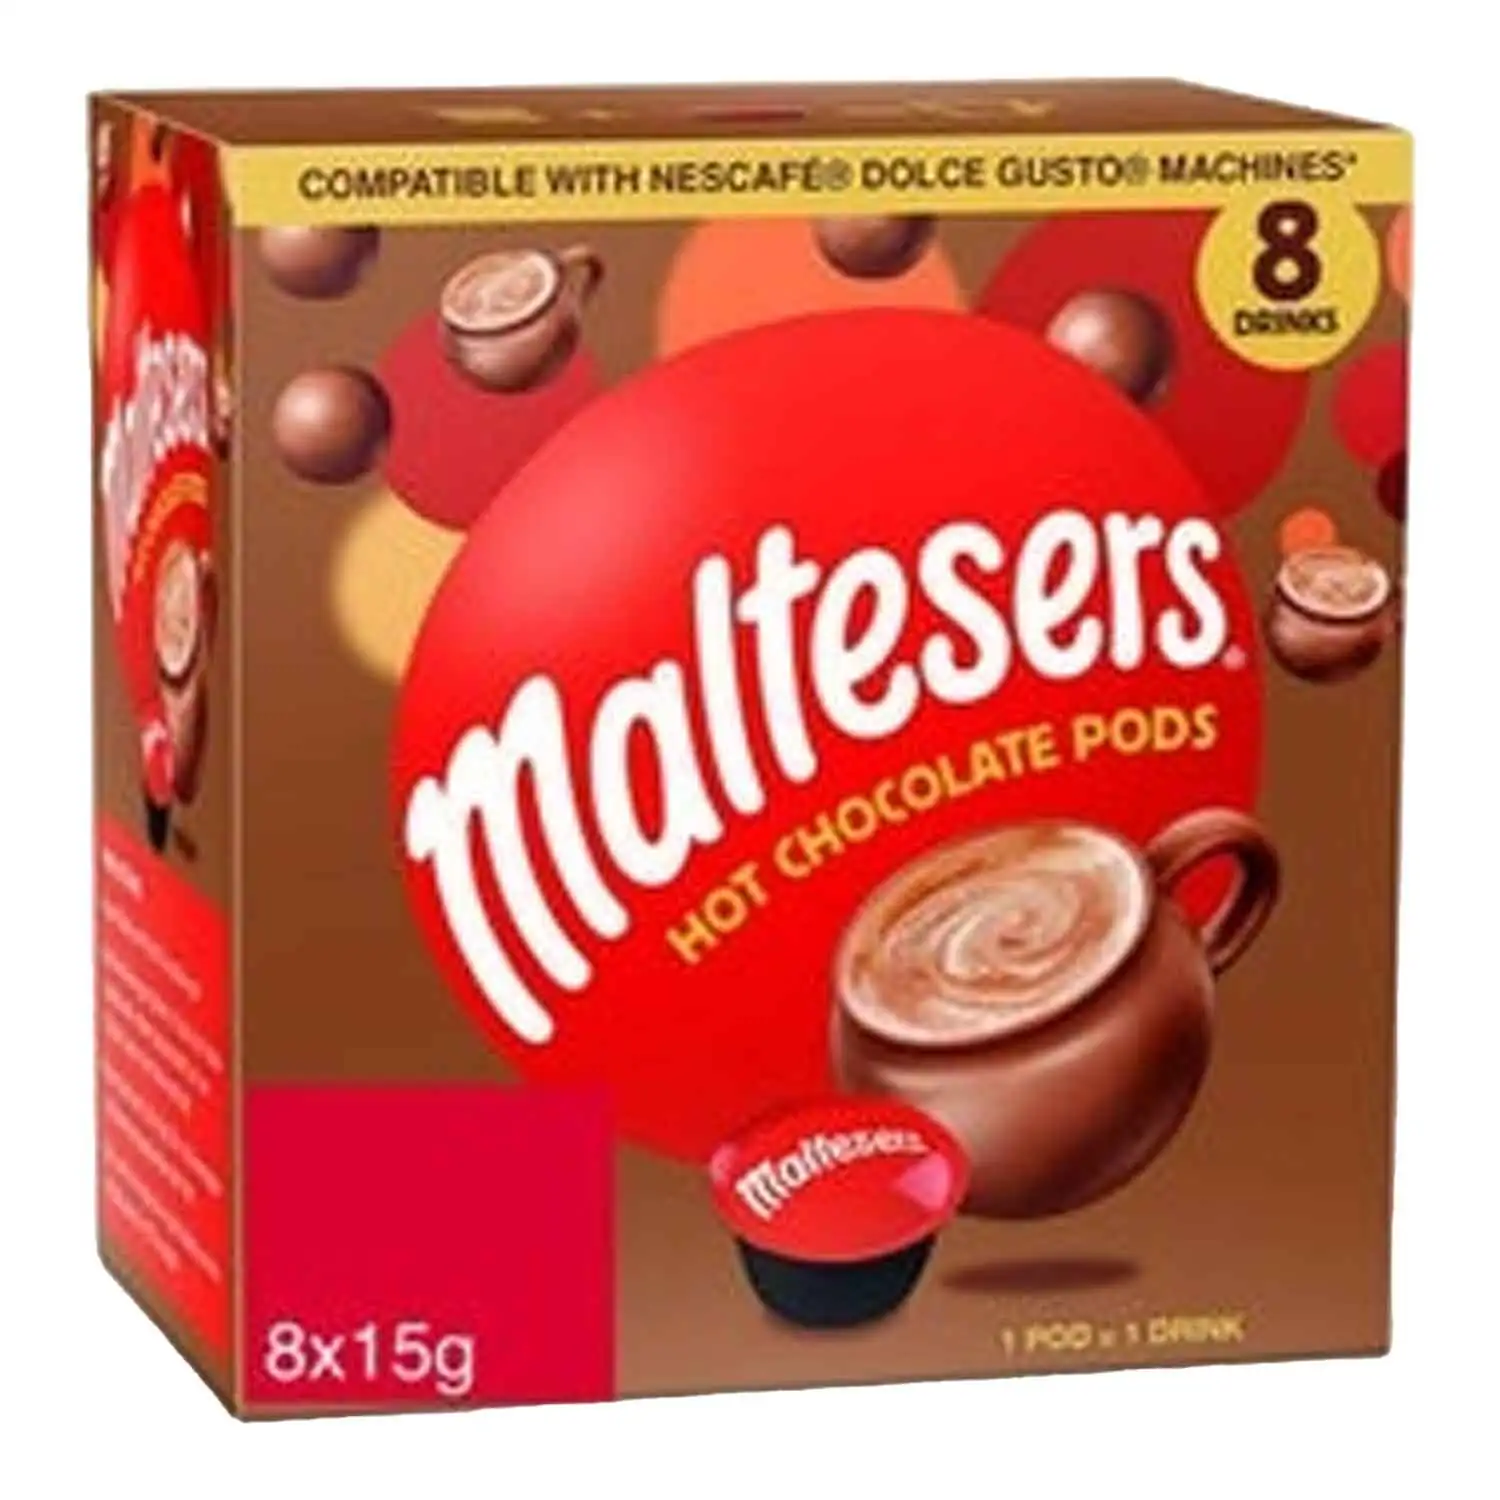 Maltesers chocolat chaud pods 8x15g